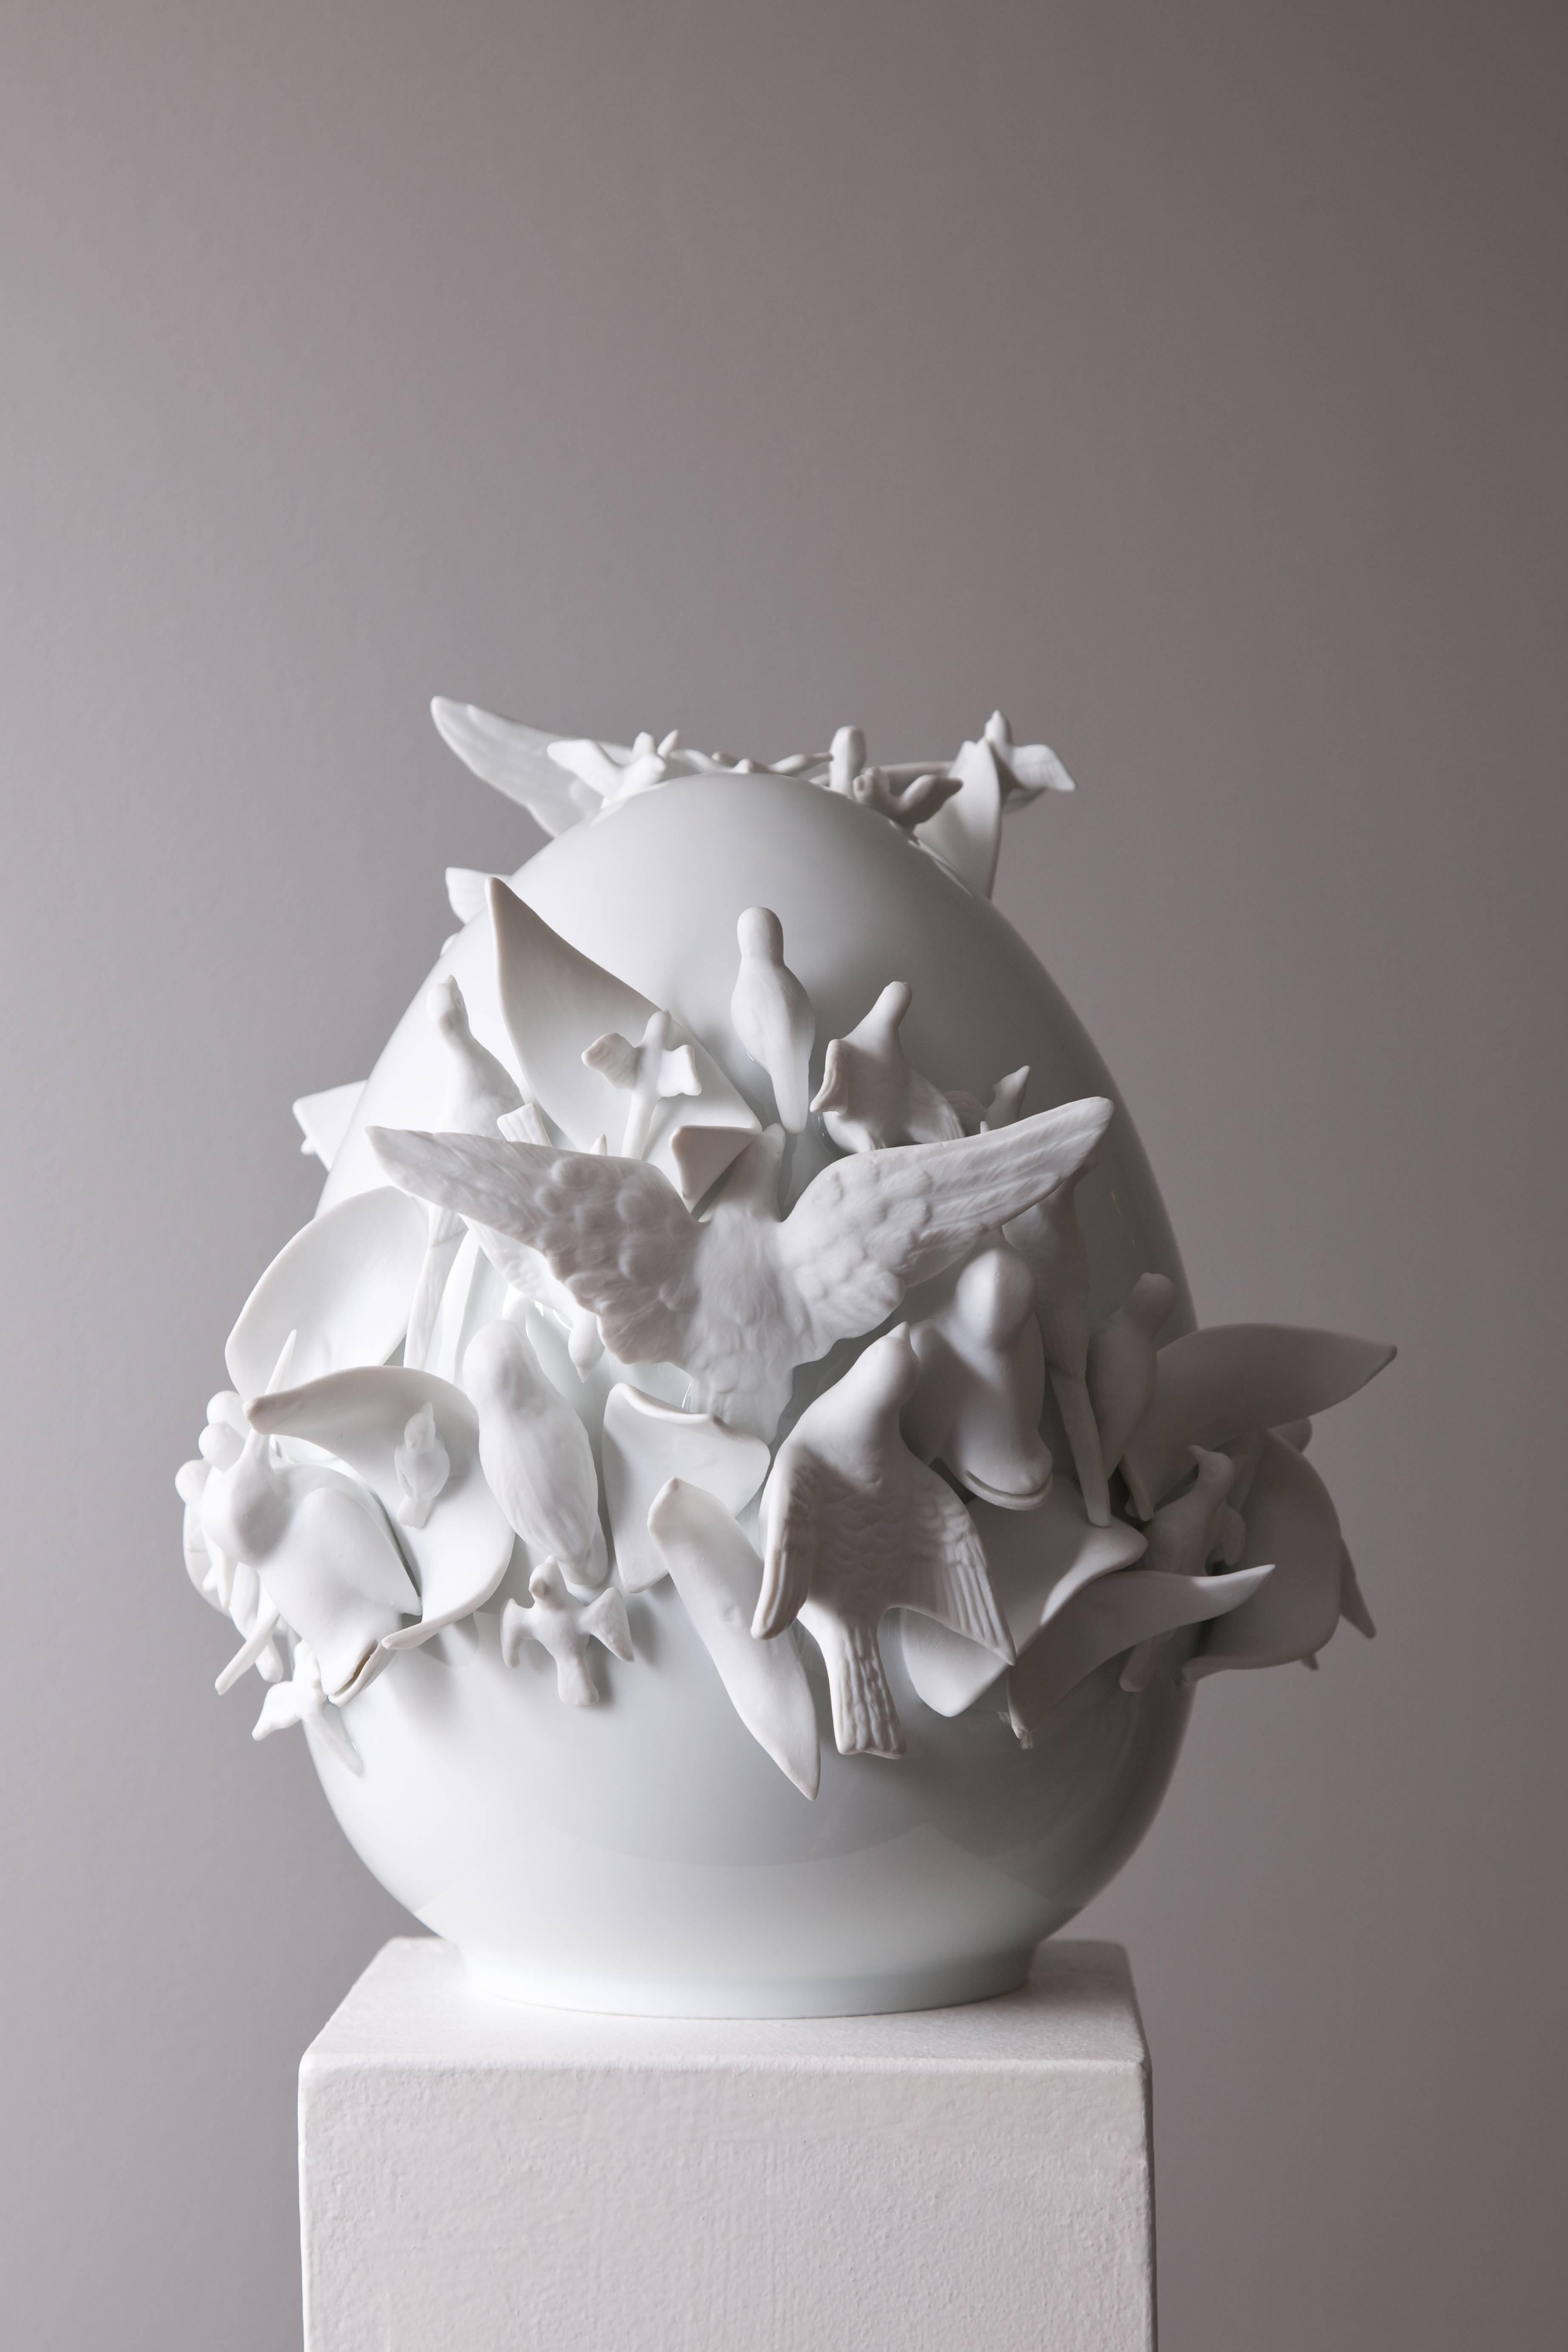 Jungle Egg - Limoges Porcelain, Enamel and Biscuit - Sculpture by Juliette Clovis